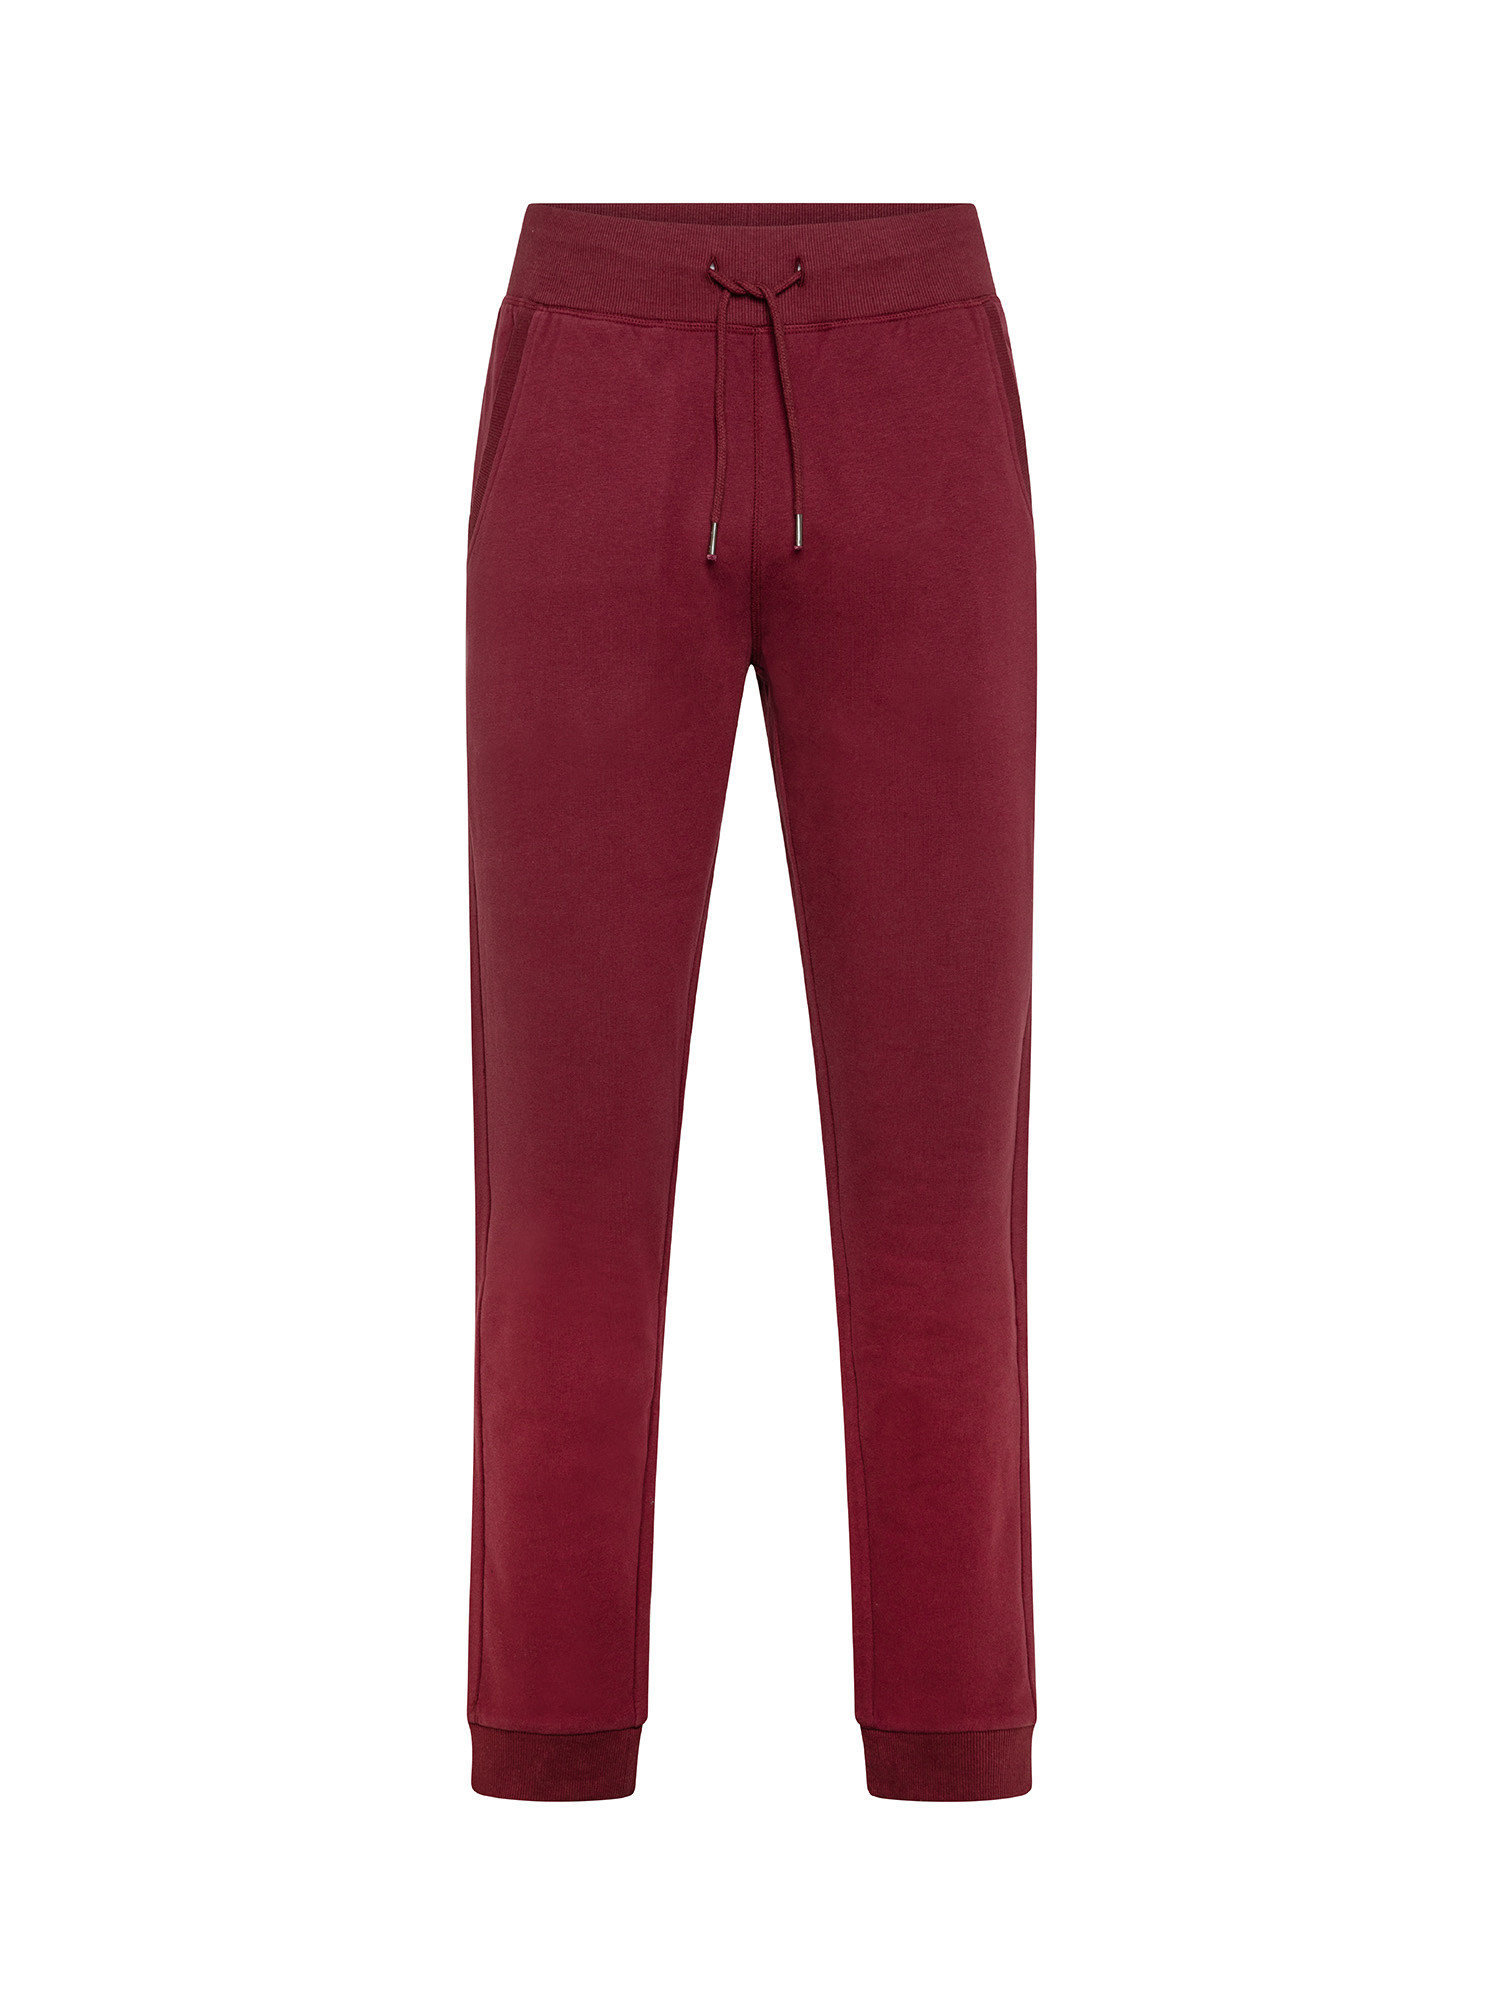 JCT - Pantalone soft touch cinque tasche, Rosso bordeaux, large image number 0